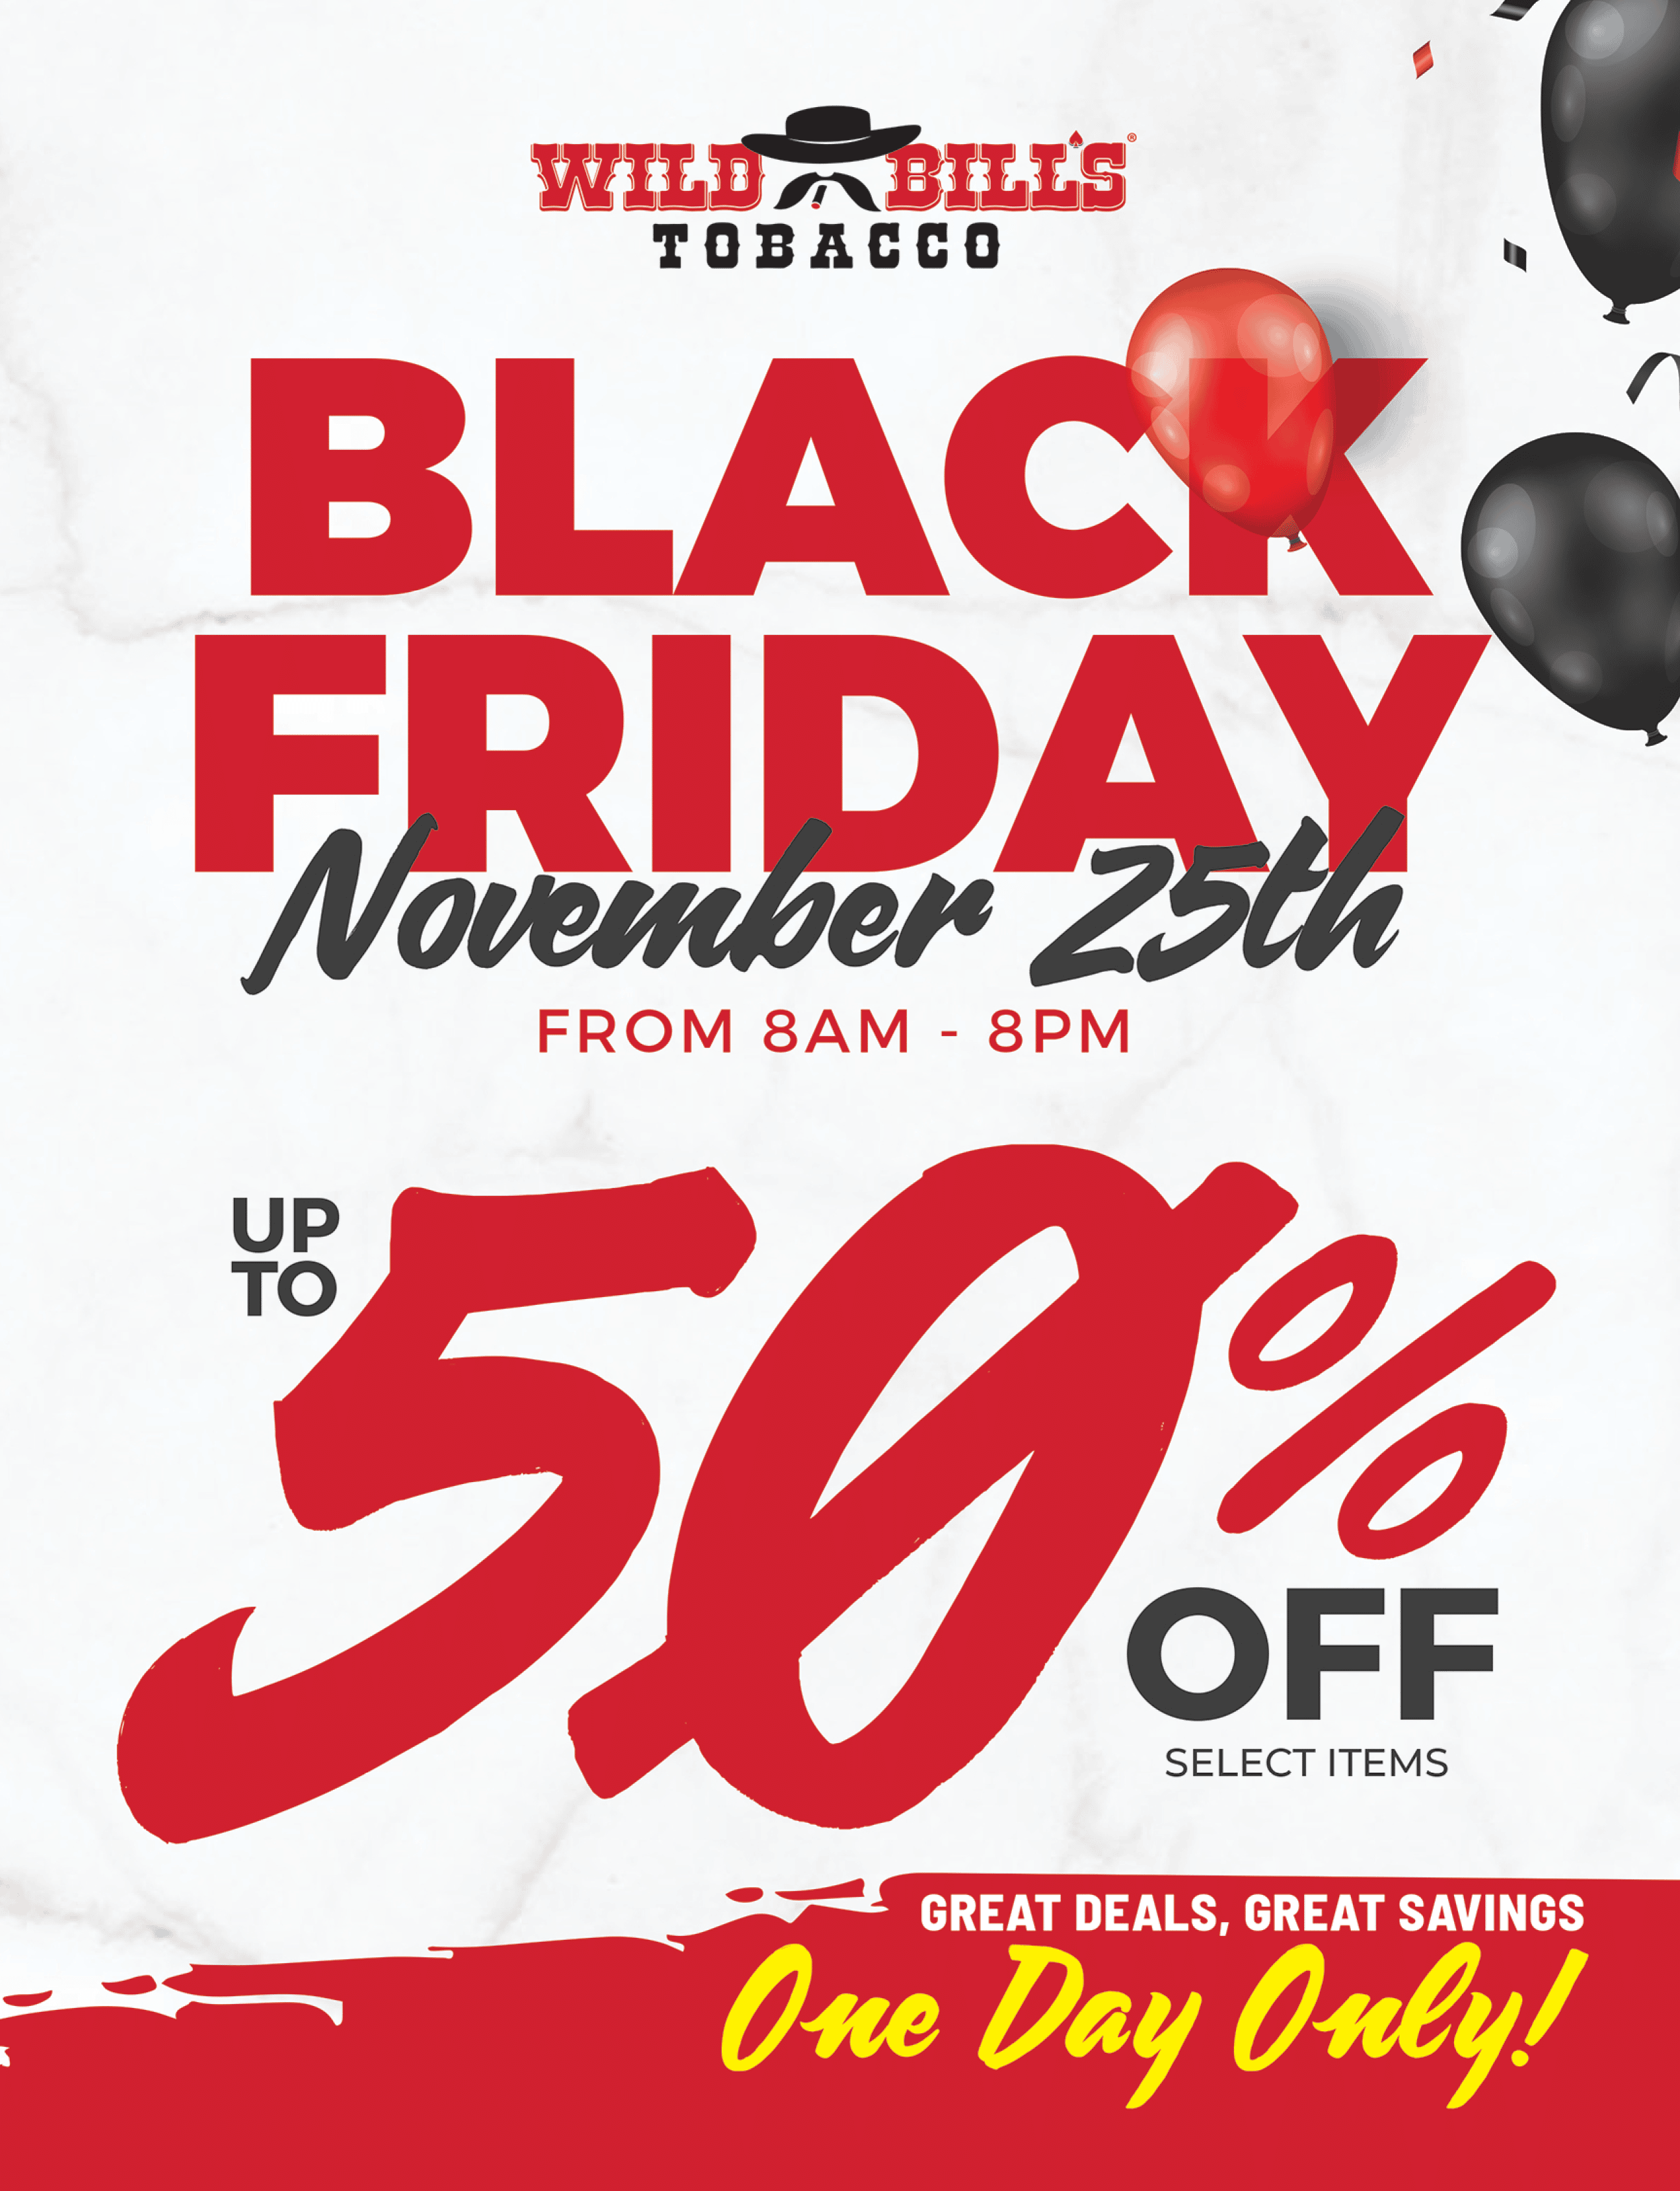 Black Friday Merch Deals: 30% To 50% Off